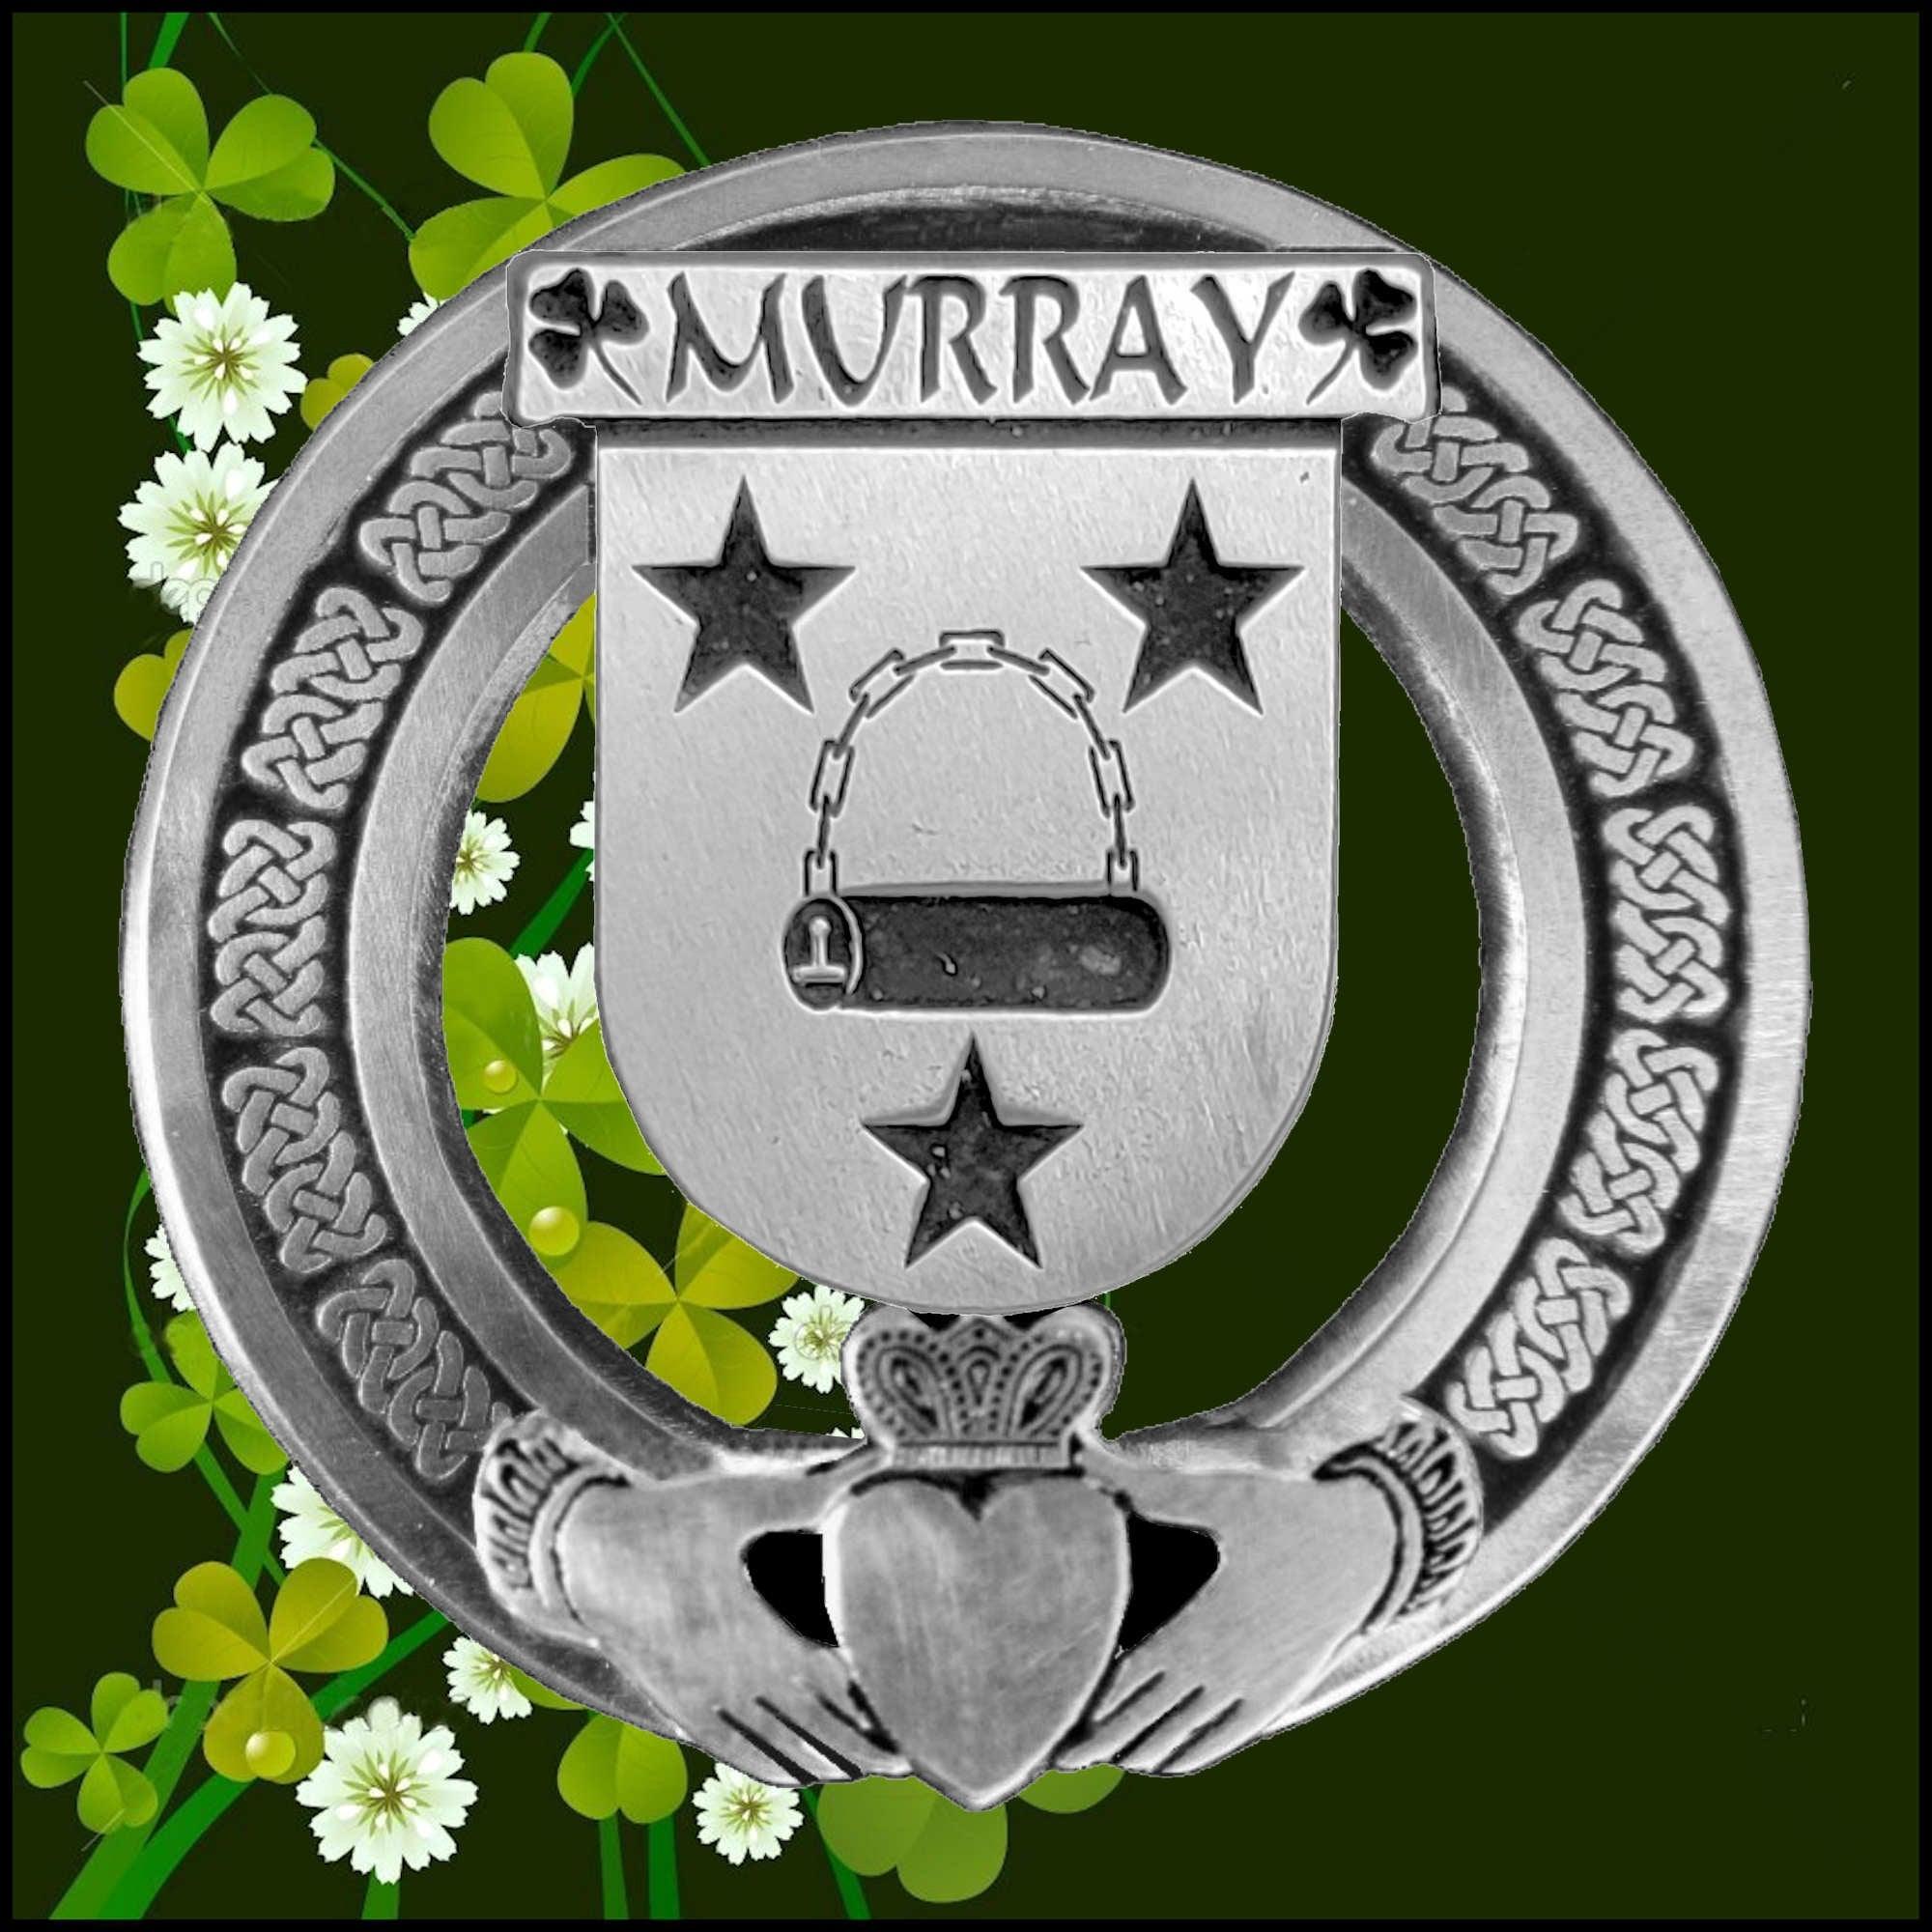 Murray 2  Irish Claddagh Coat of Arms Badge